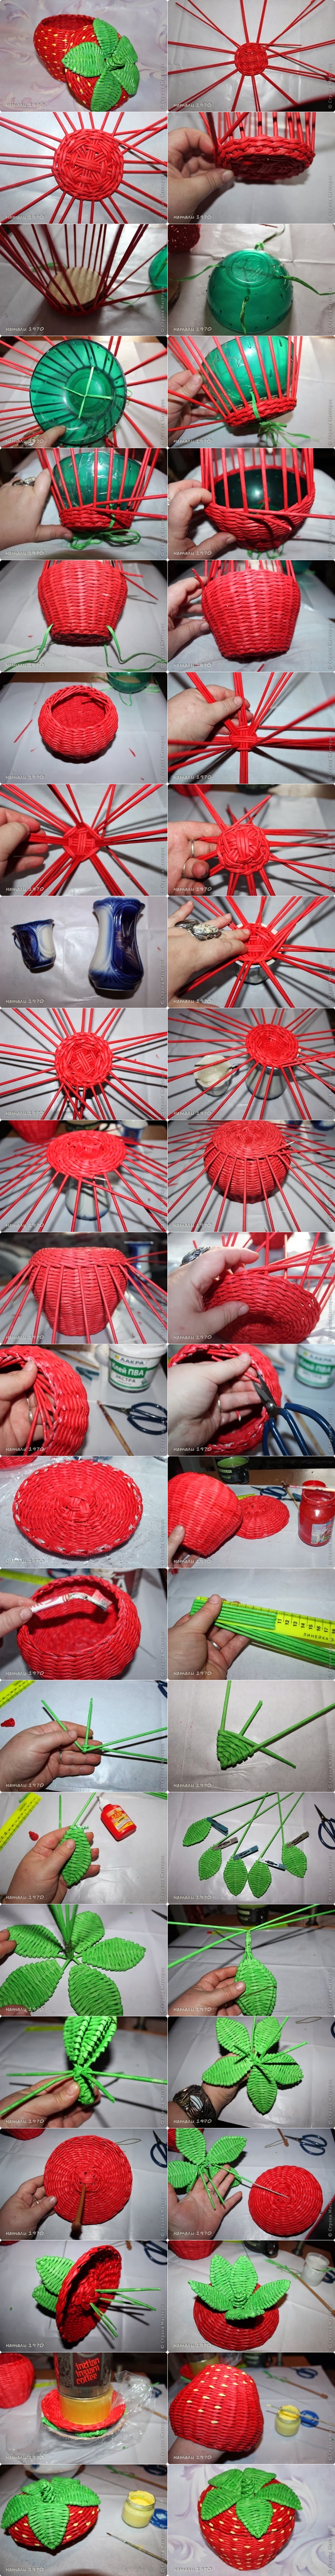 strawberry basket tutorial